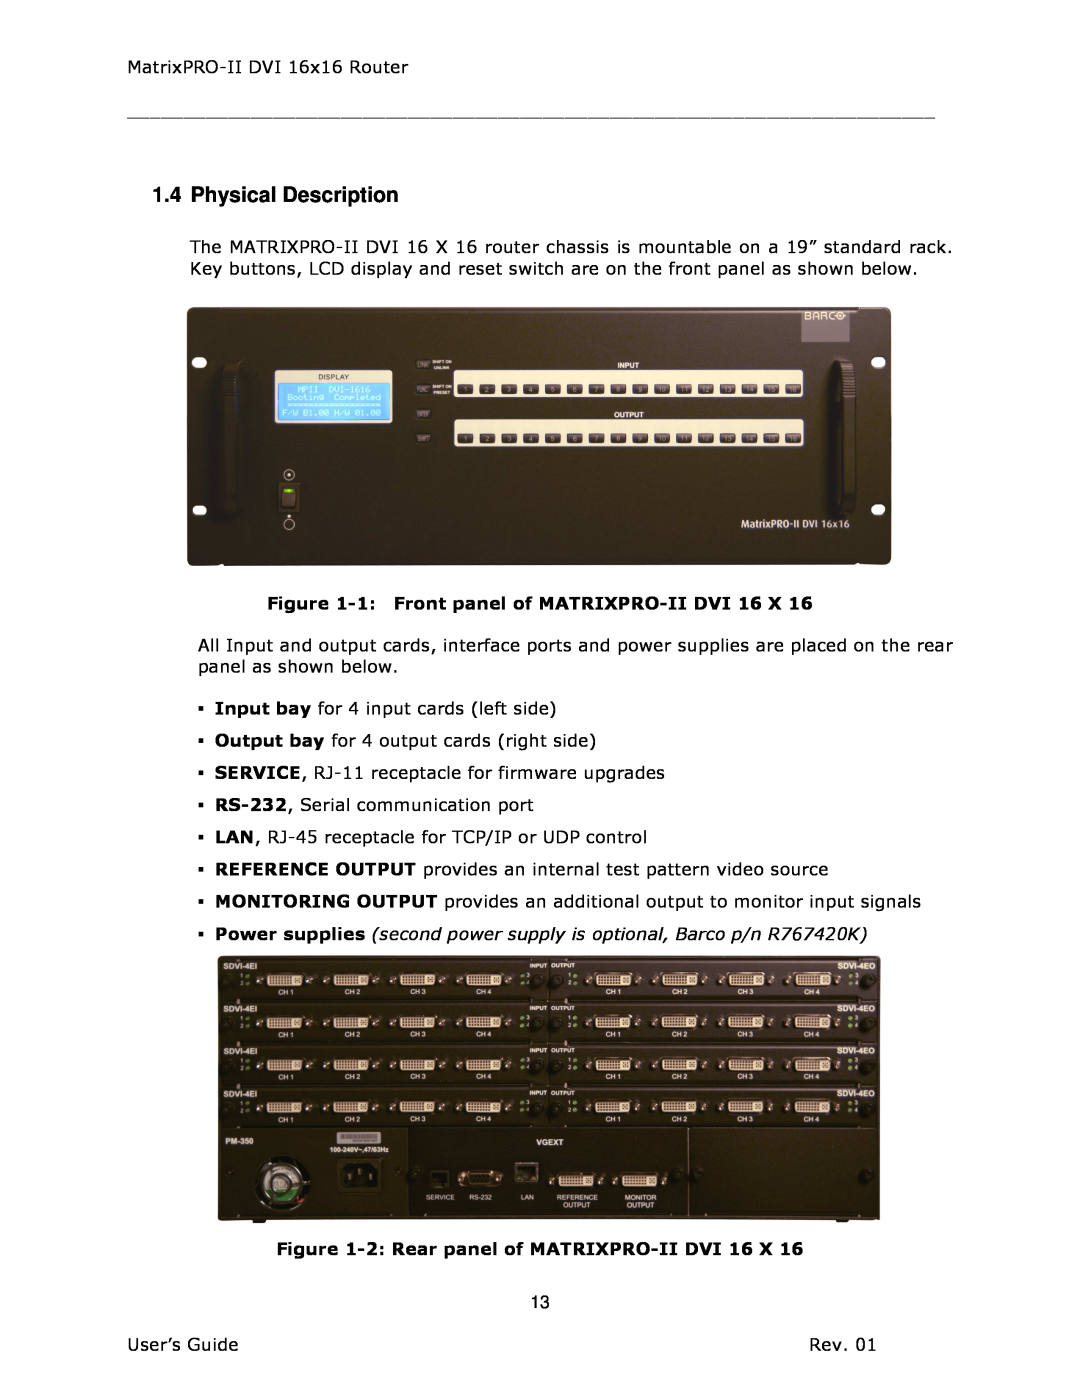 Barco 26-1302001-00 manual Physical Description, 1 Front panel of MATRIXPRO-II DVI 16, 2 Rear panel of MATRIXPRO-II DVI 16 